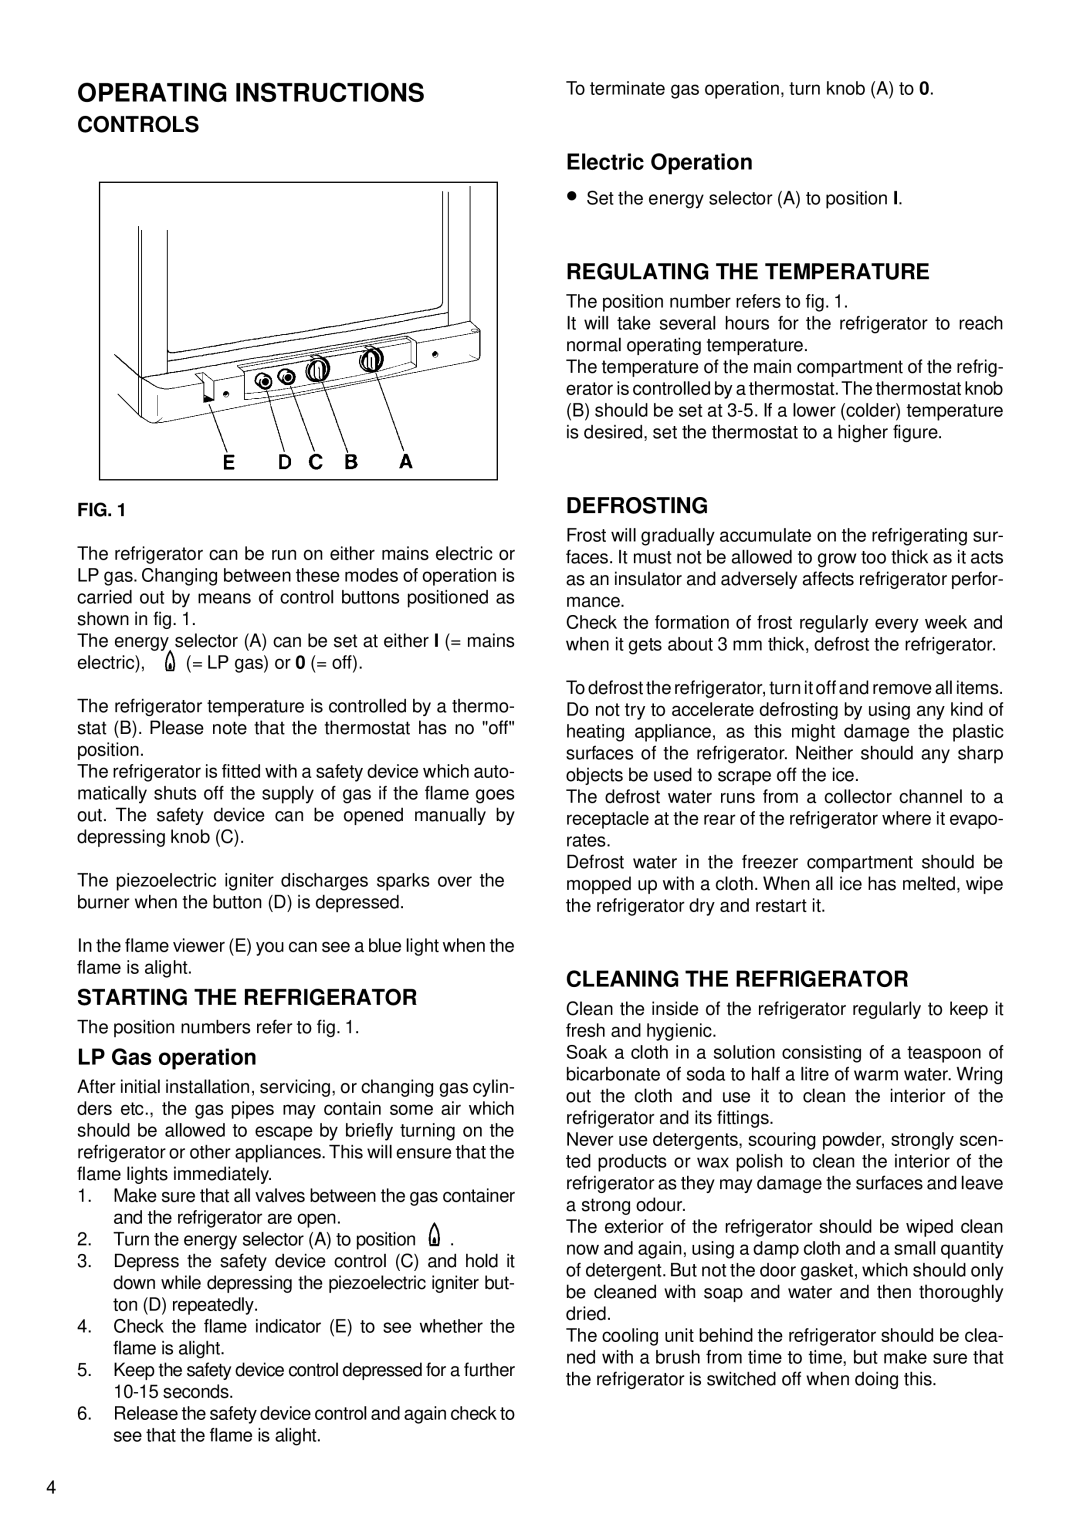 Sibir Optics V 170 GE Operating Instructions, Controls, Starting The Refrigerator, LP Gas operation, Electric Operation 